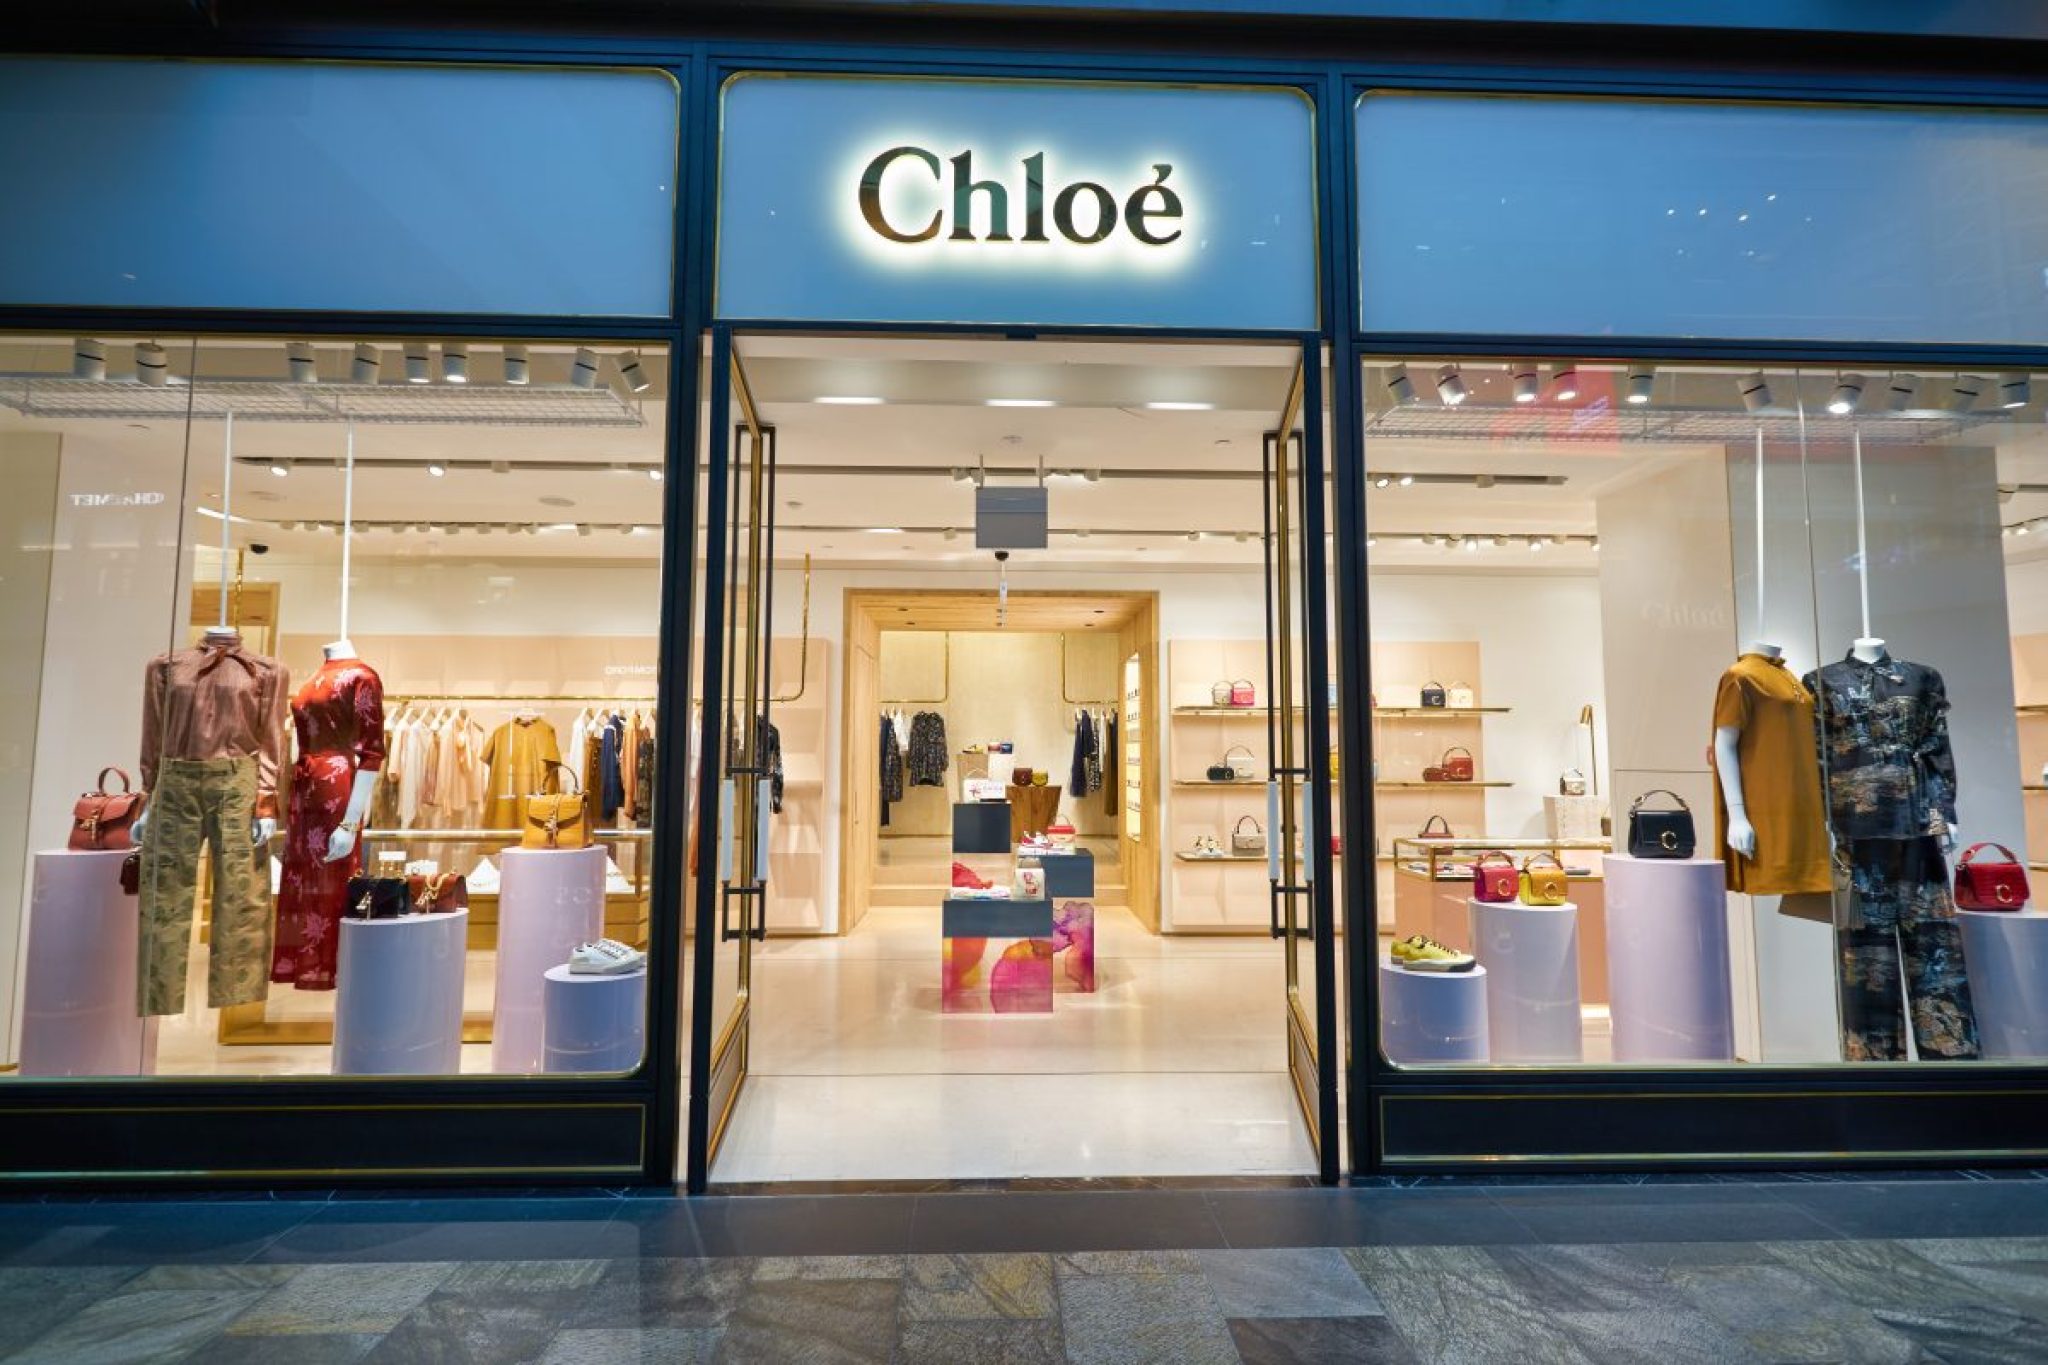 Chloé Shoe Size Chart Do Chloé Shoes Stretch? The Shoe Box NYC